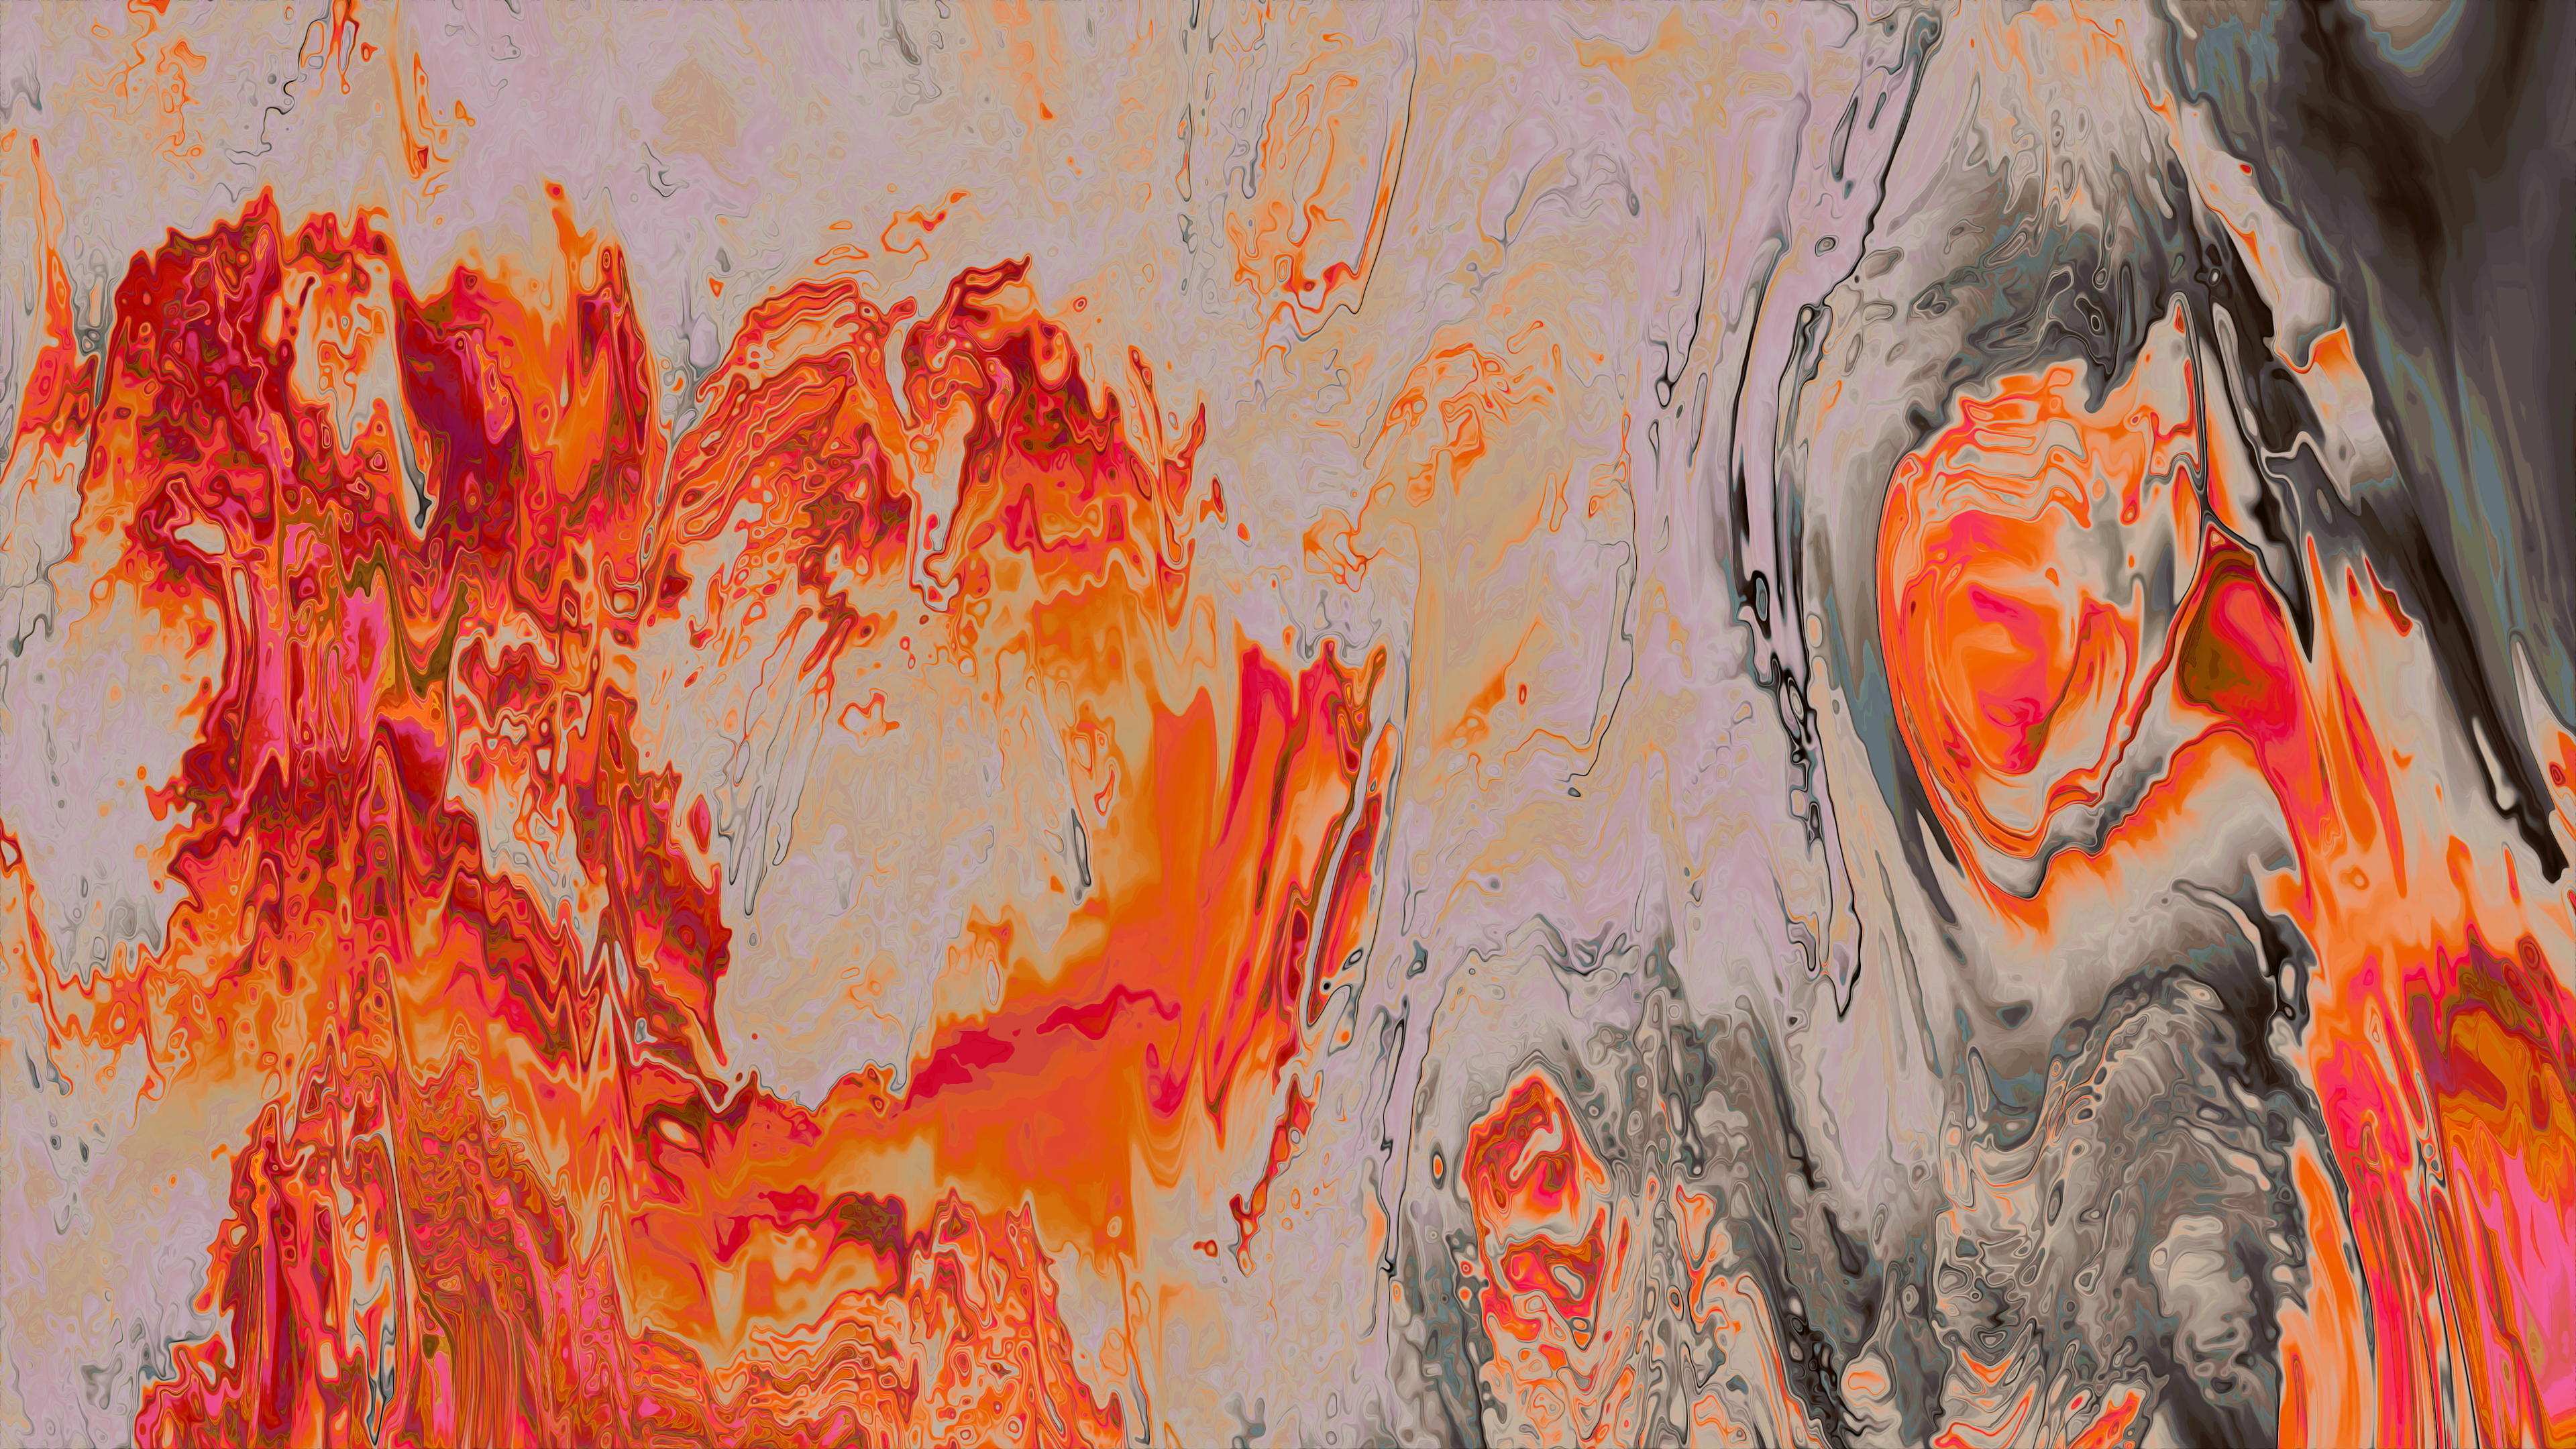 Abstract 3D Abstract Surreal Colorful Wavy Lines Wavy Liquid Shapes Digital Art 3840x2160